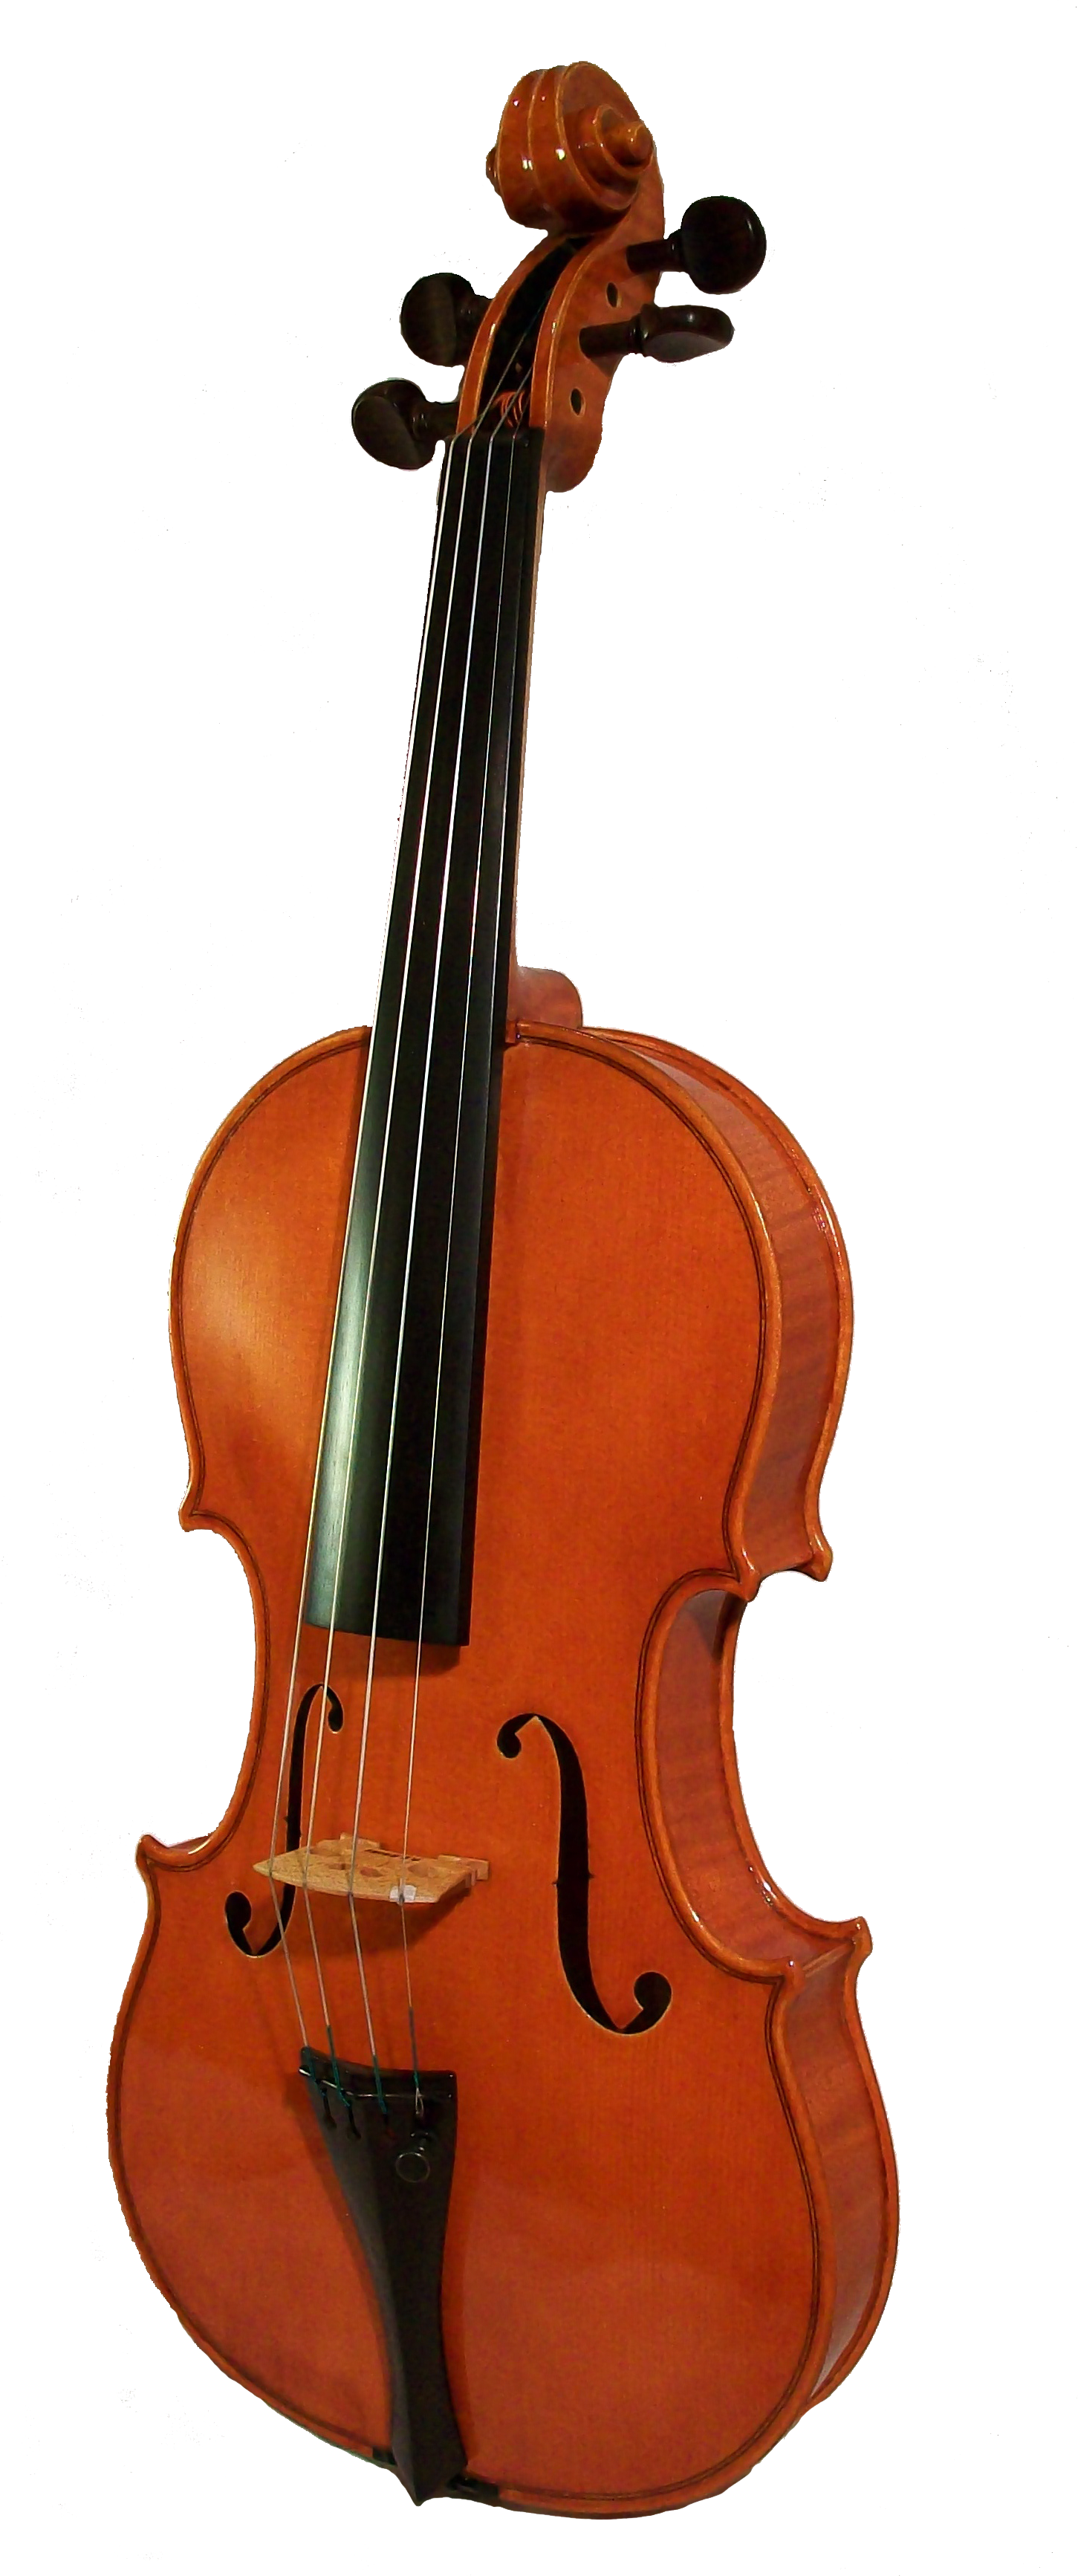 Violin Instrument Transparent Image